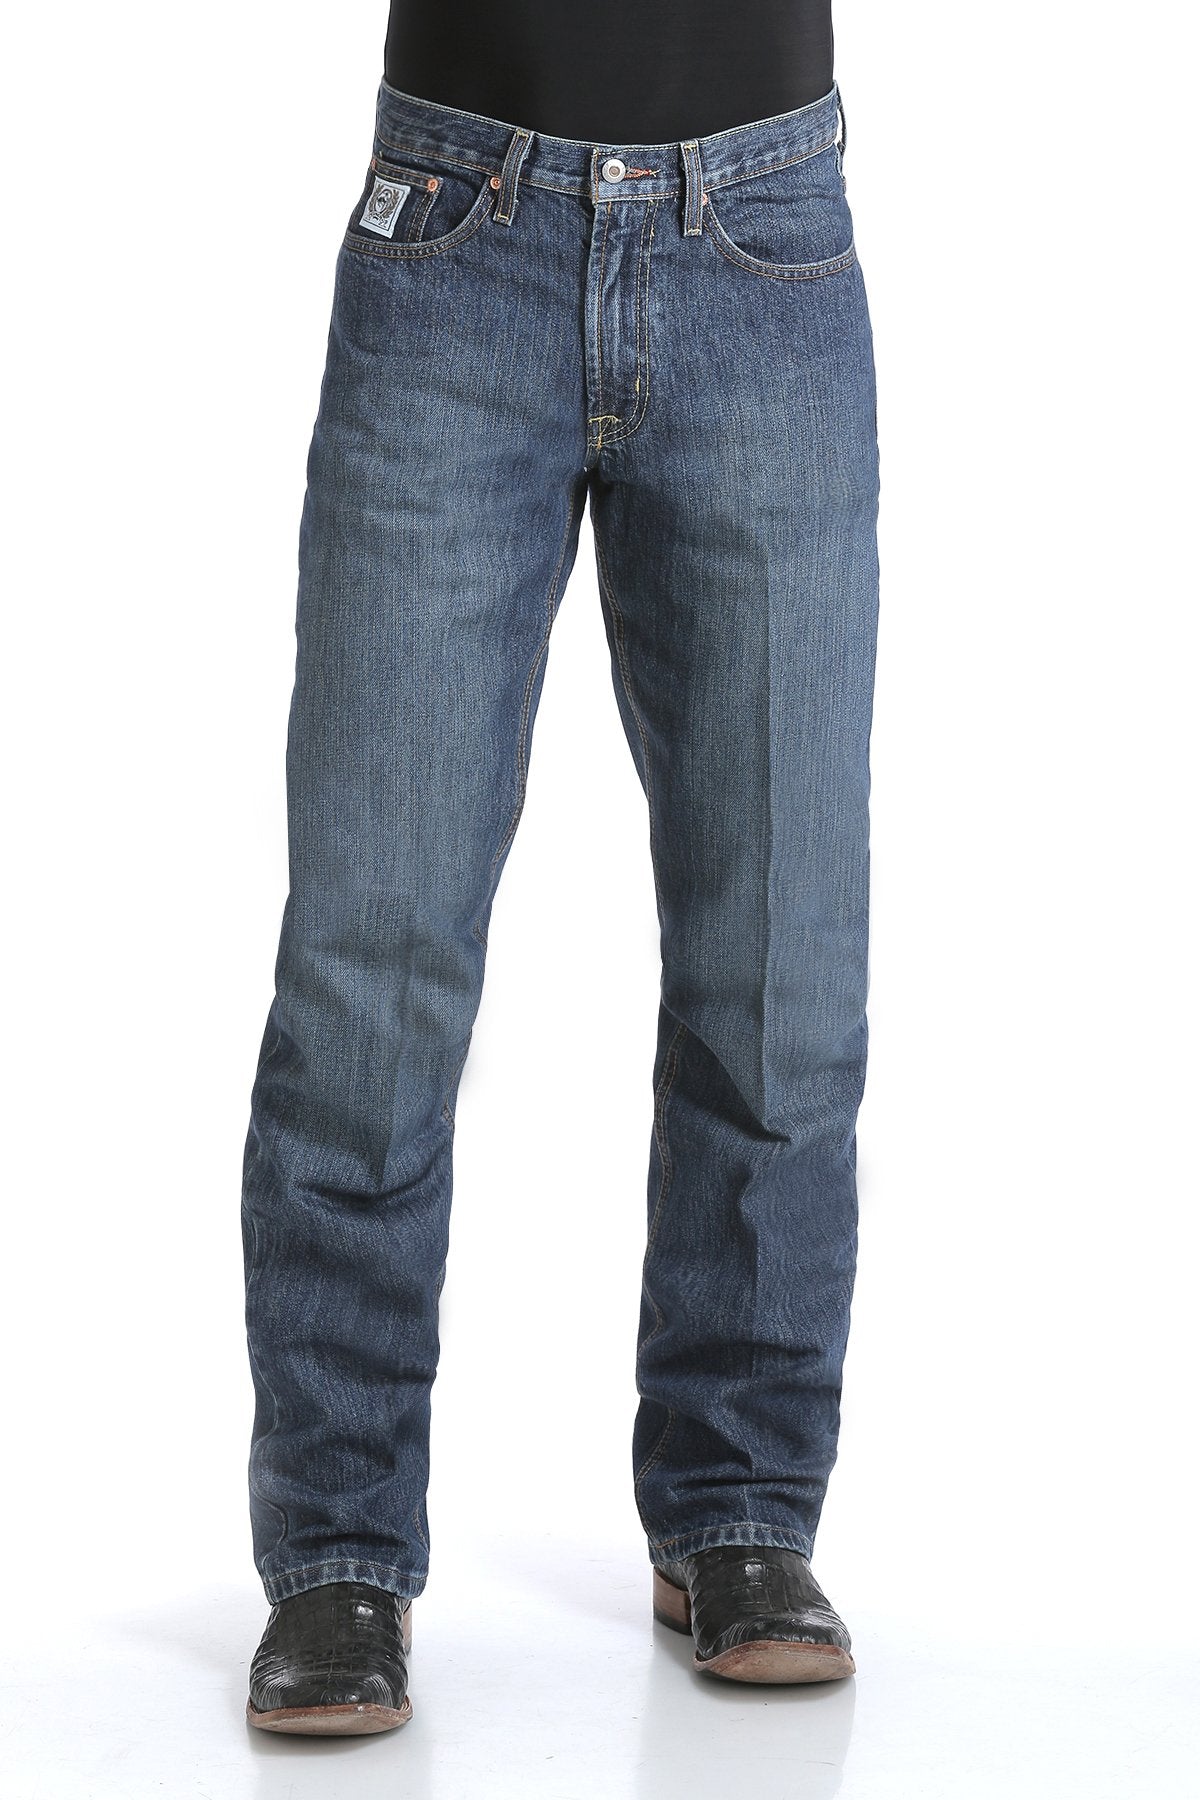 Cinch Mens White Label Relaxed Fit Jeans 34 Inch Leg (Dark Stonewash)